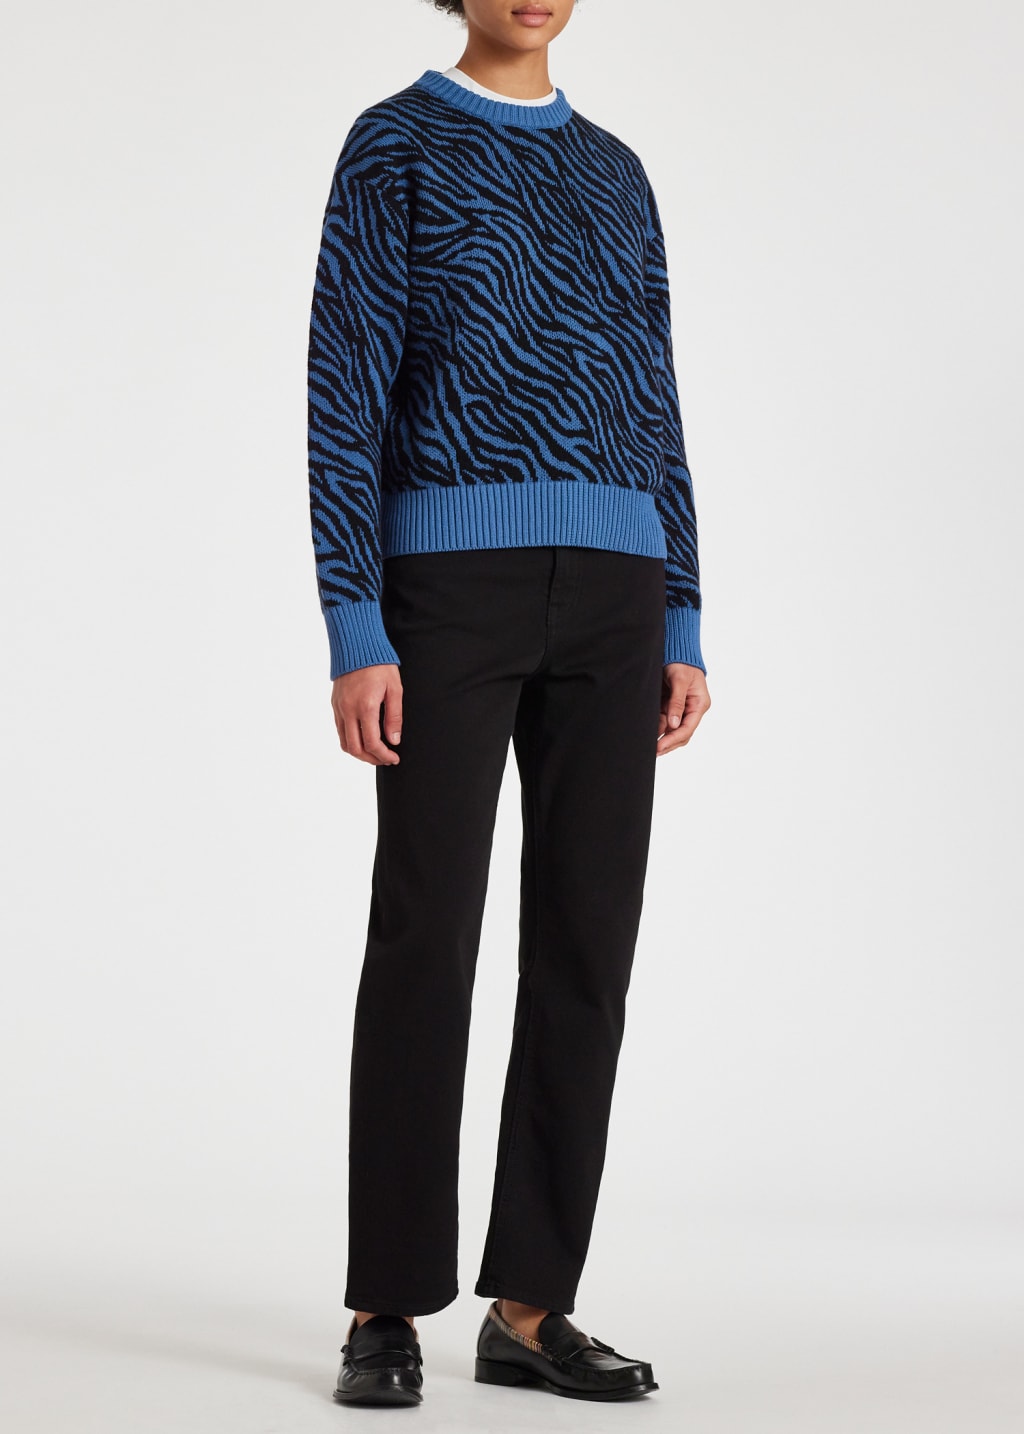 Model View - Women's Organic Cotton Blue Zebra Sweater Paul Smith